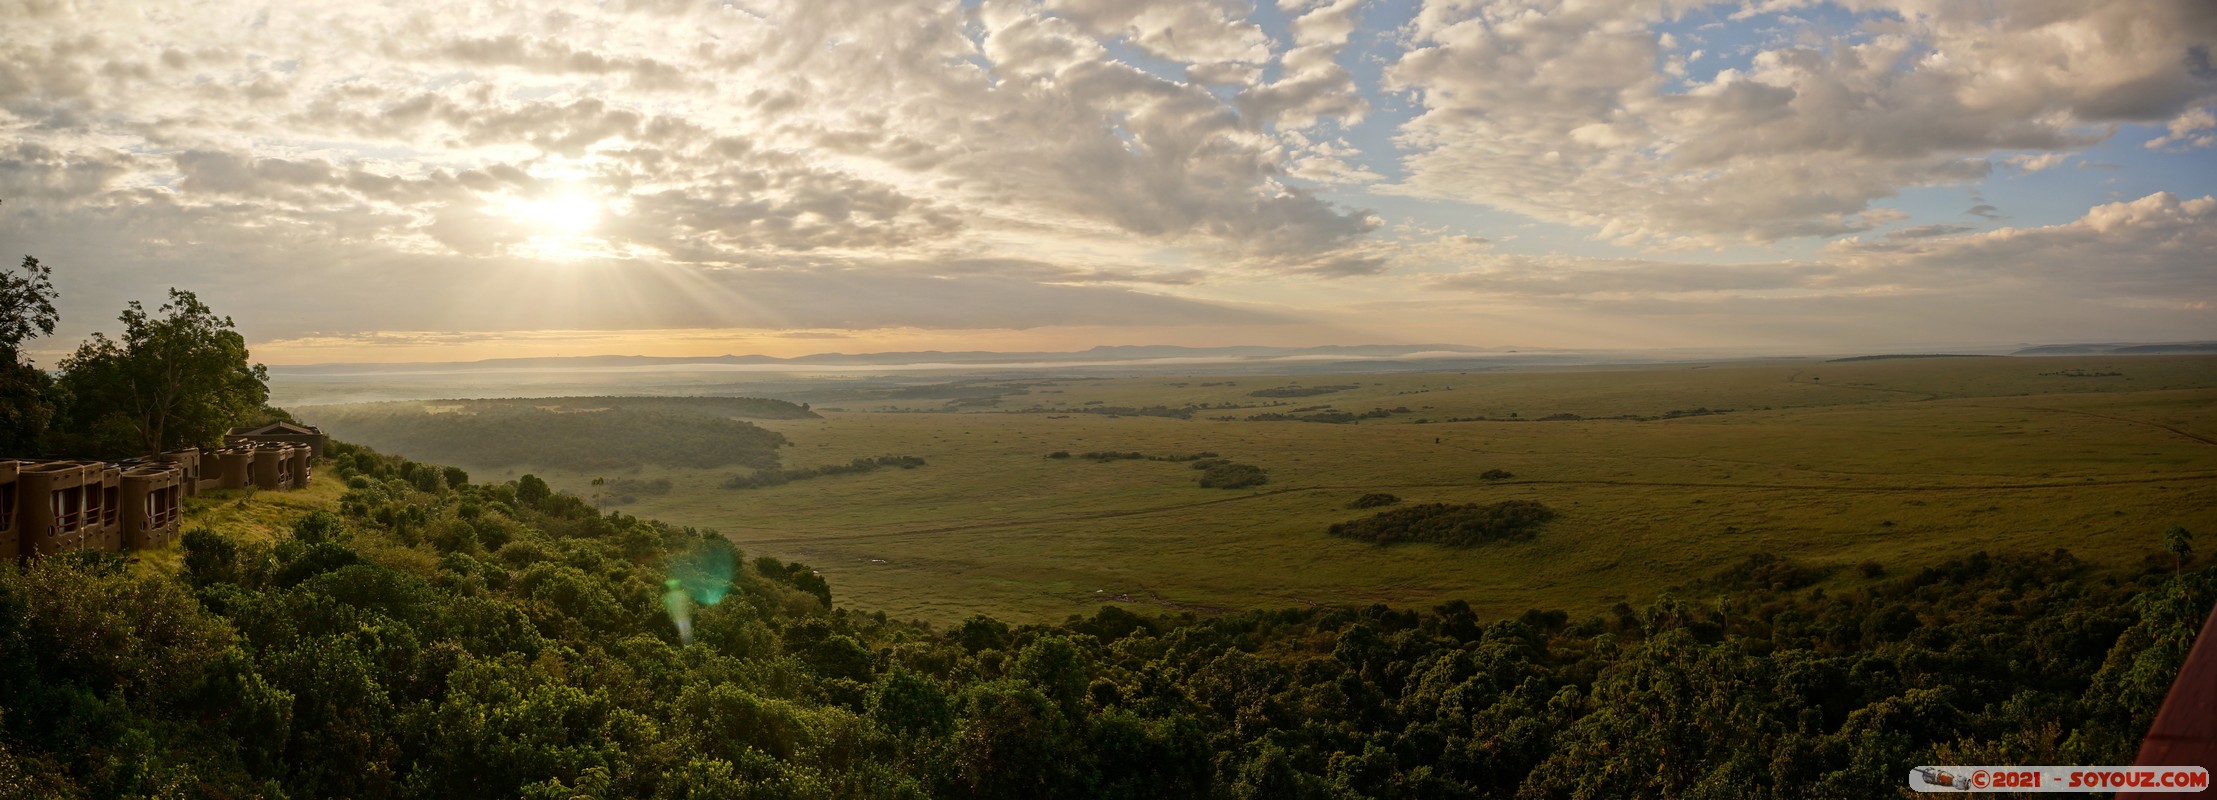 Masai Mara - Sunrise - panorama
Mots-clés: geo:lat=-1.40208720 geo:lon=35.02622685 geotagged KEN Kenya Narok Ol Kiombo paysage sunset Lumiere panorama